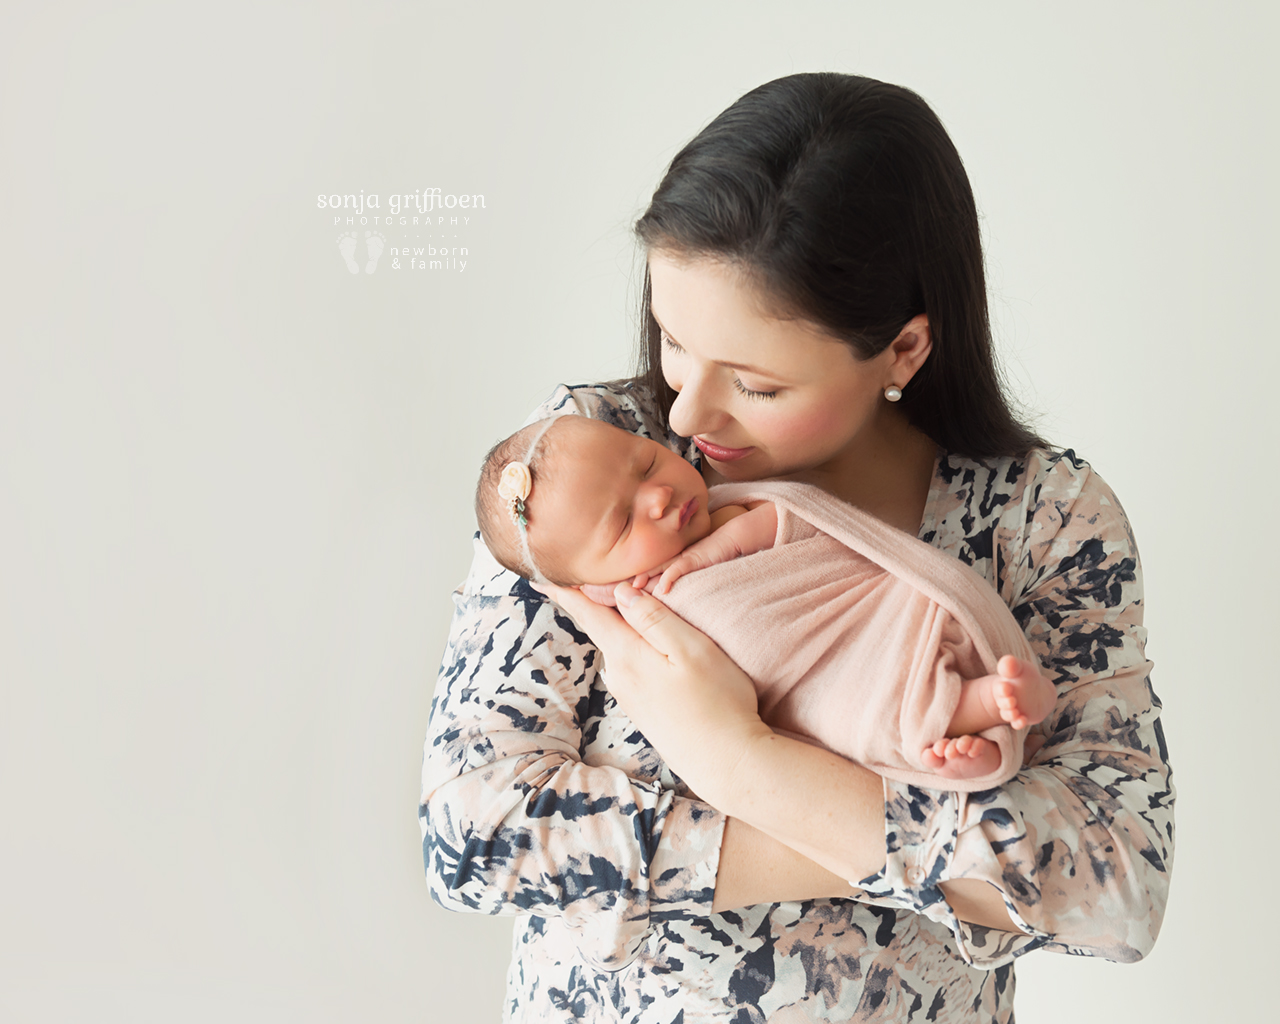 Chloe-Newborn-Brisbane-Newborn-Photographer-Sonja-Griffioen-02.jpg